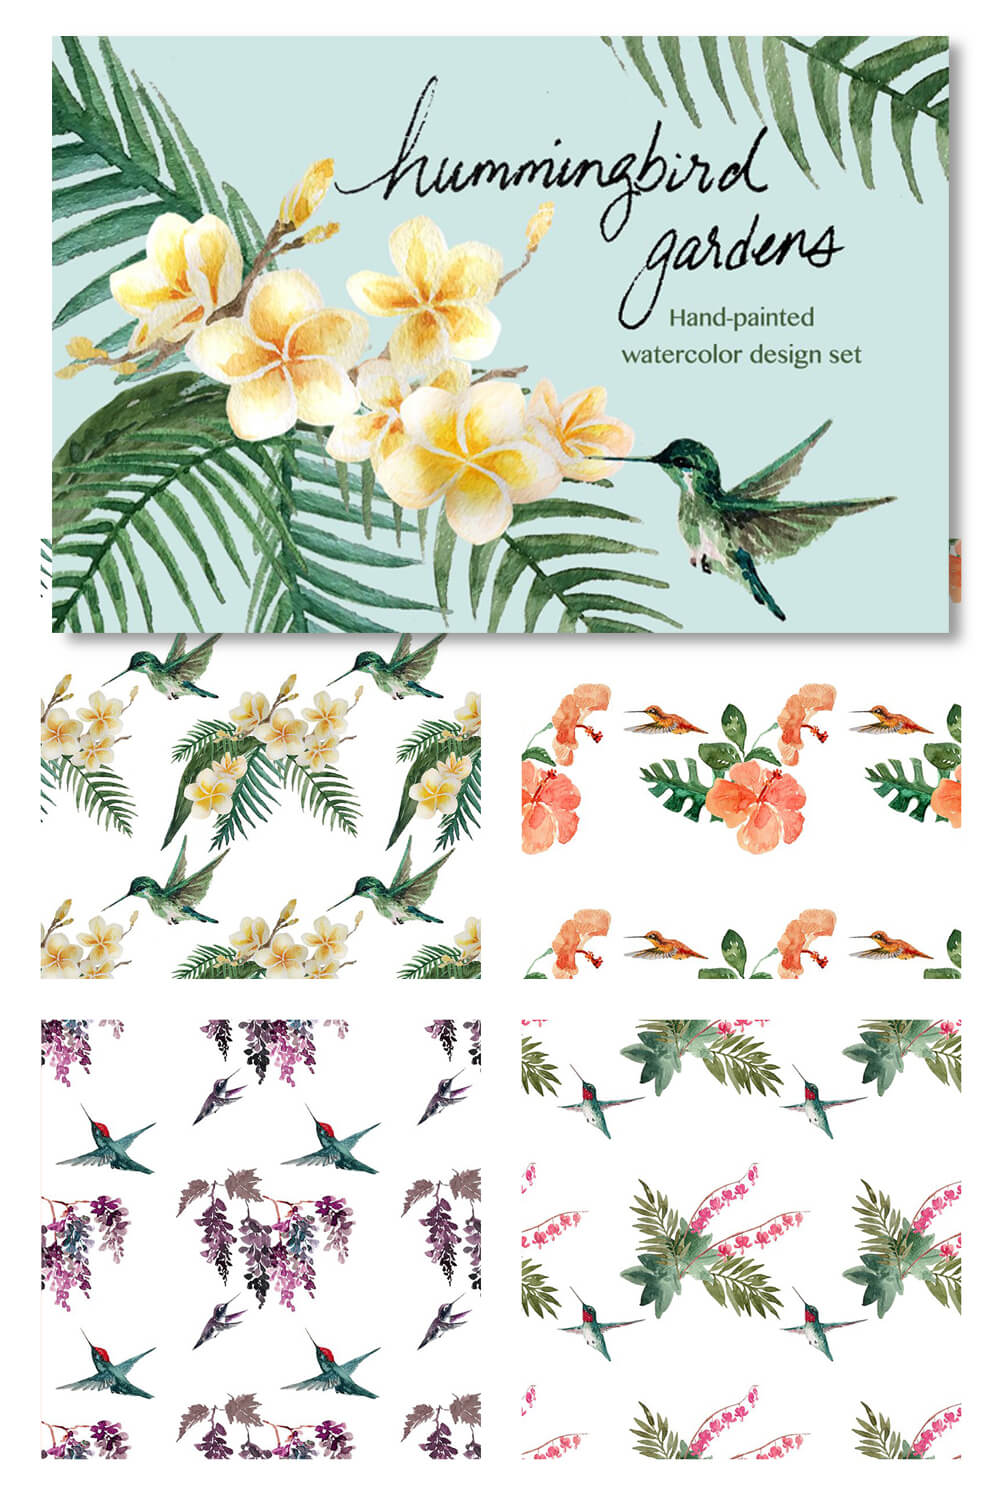 Hummingbird Gardens Hand-painted Watercolor Design Set.